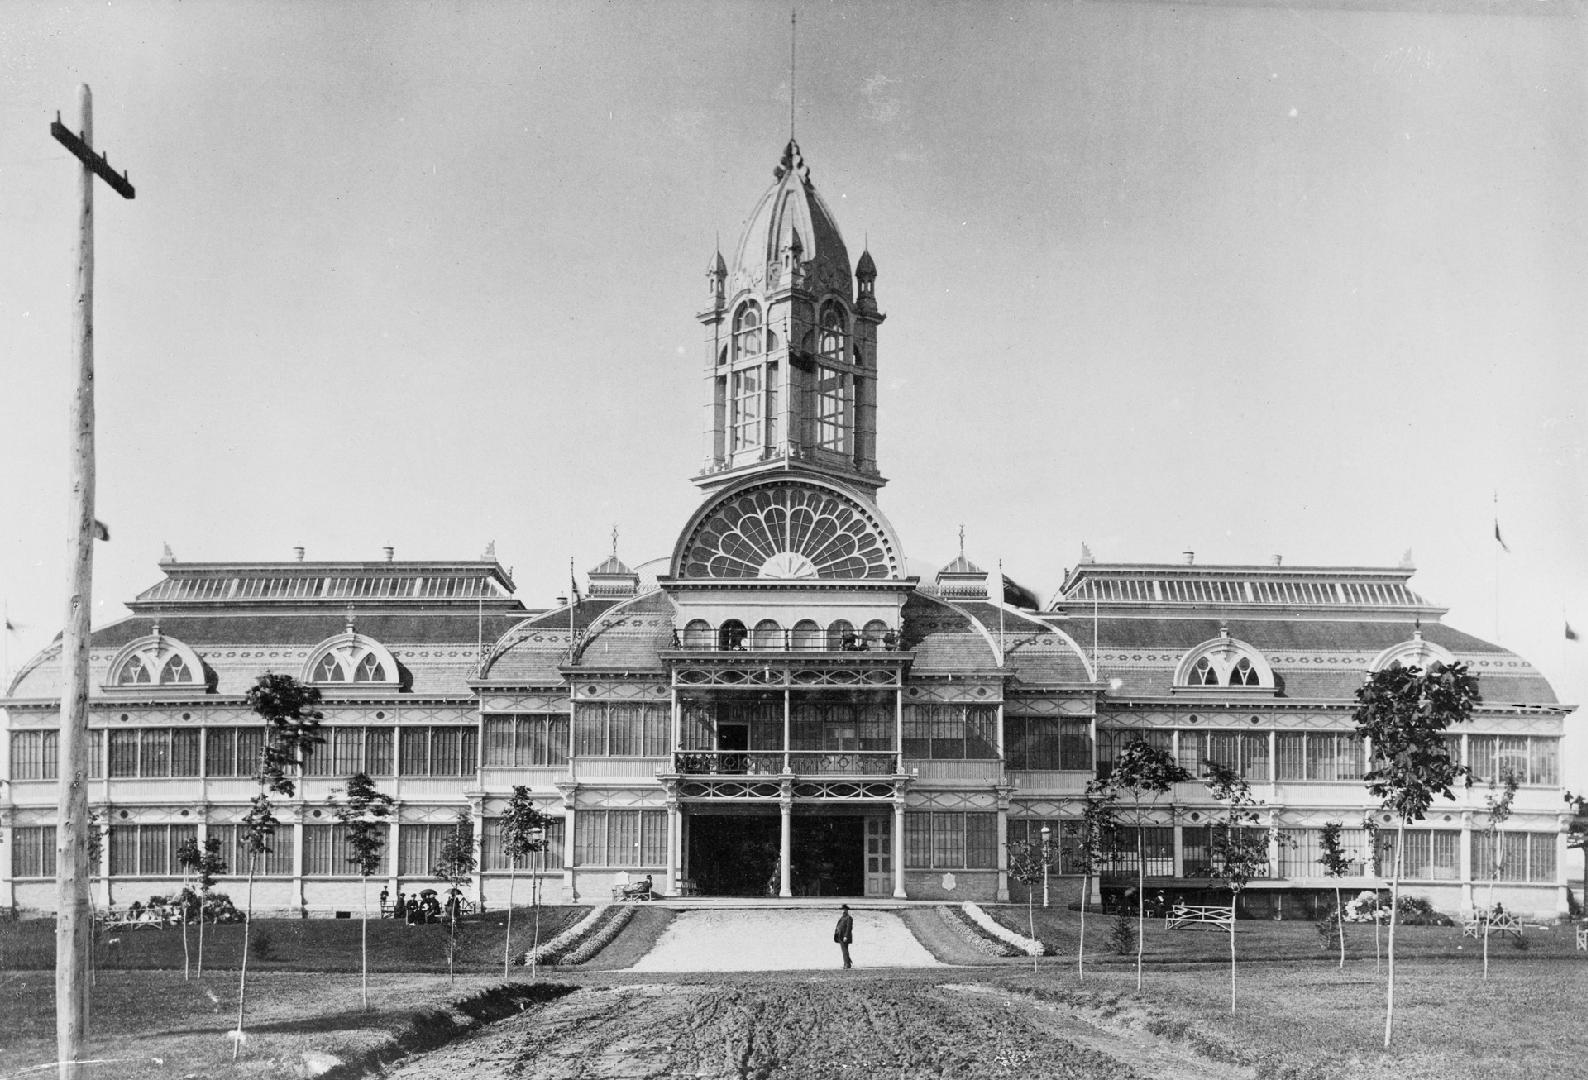 Crystal Palace (1879-1906)